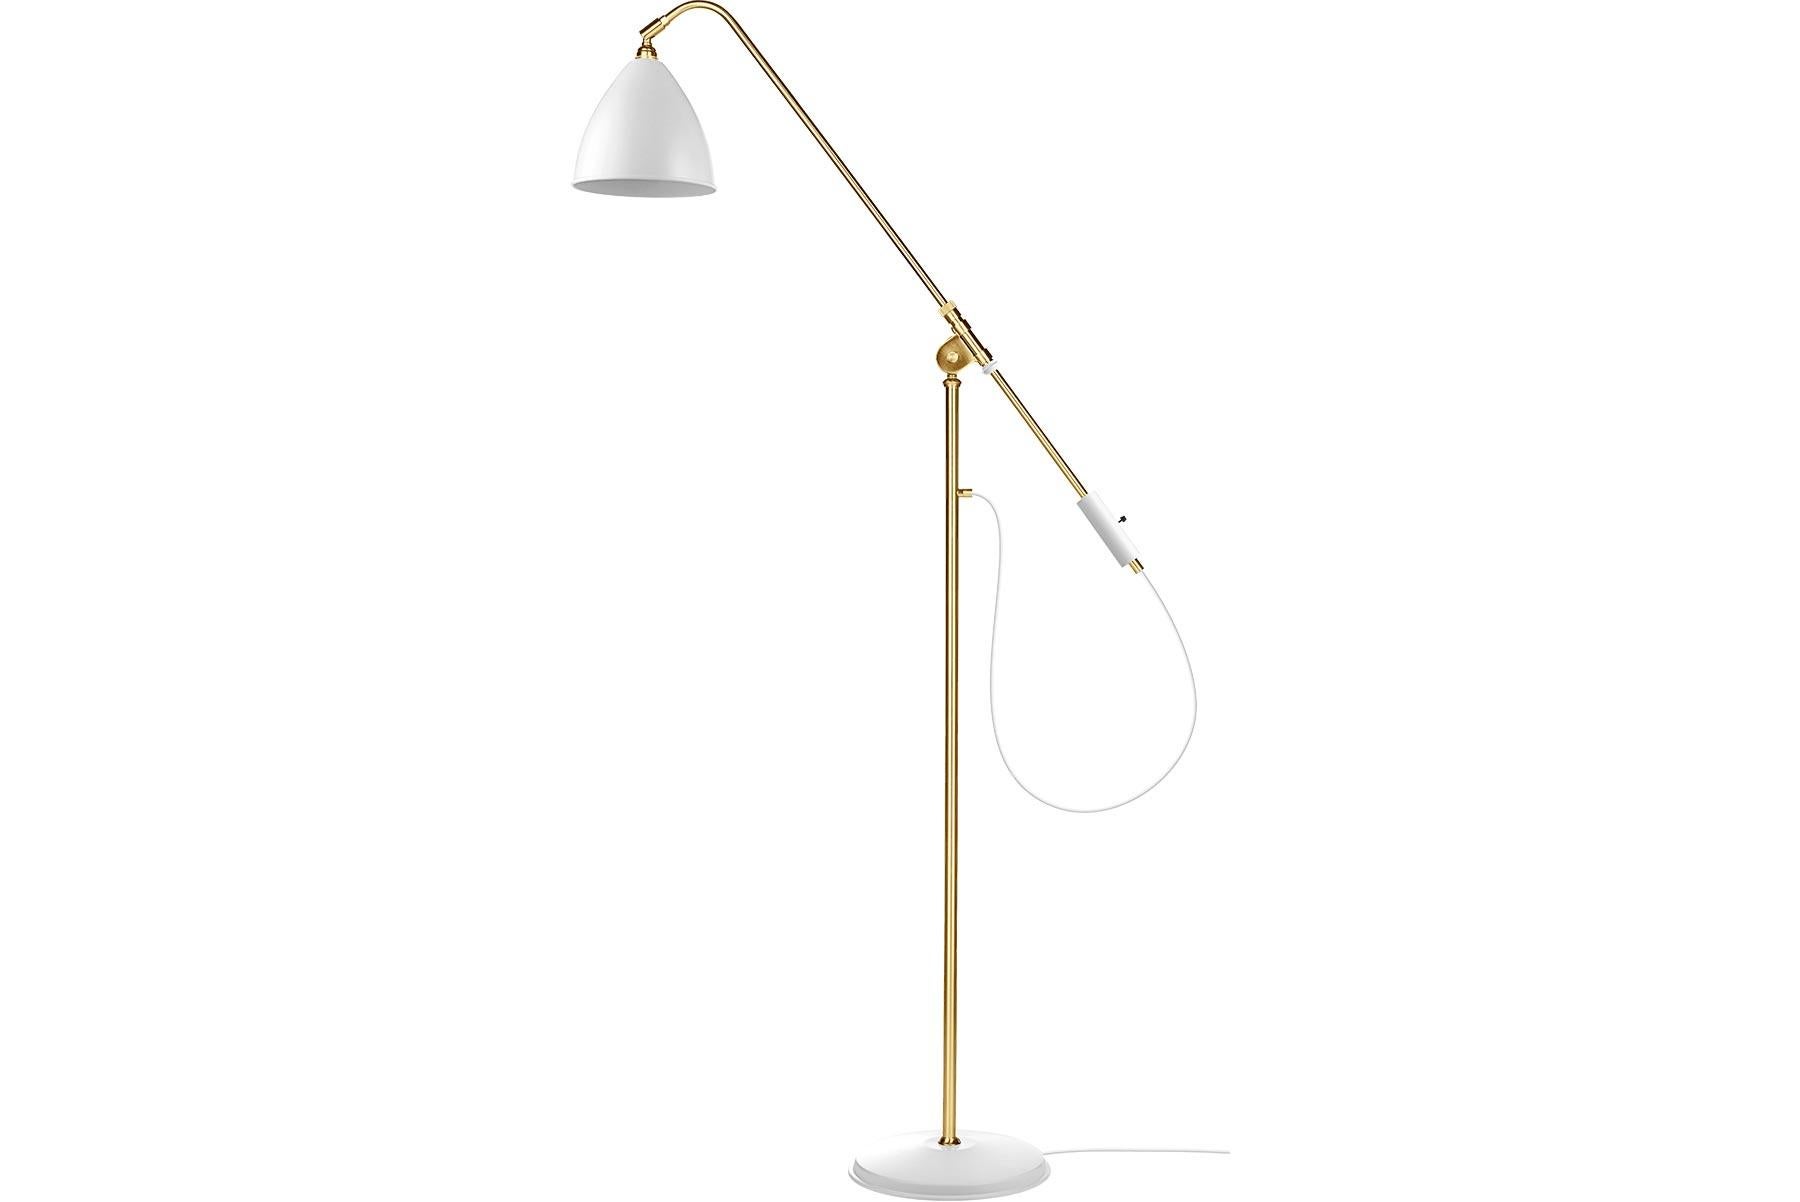 Bauhaus Robert Dudley Bestlite BL4 Floor Lamp, Brass and White